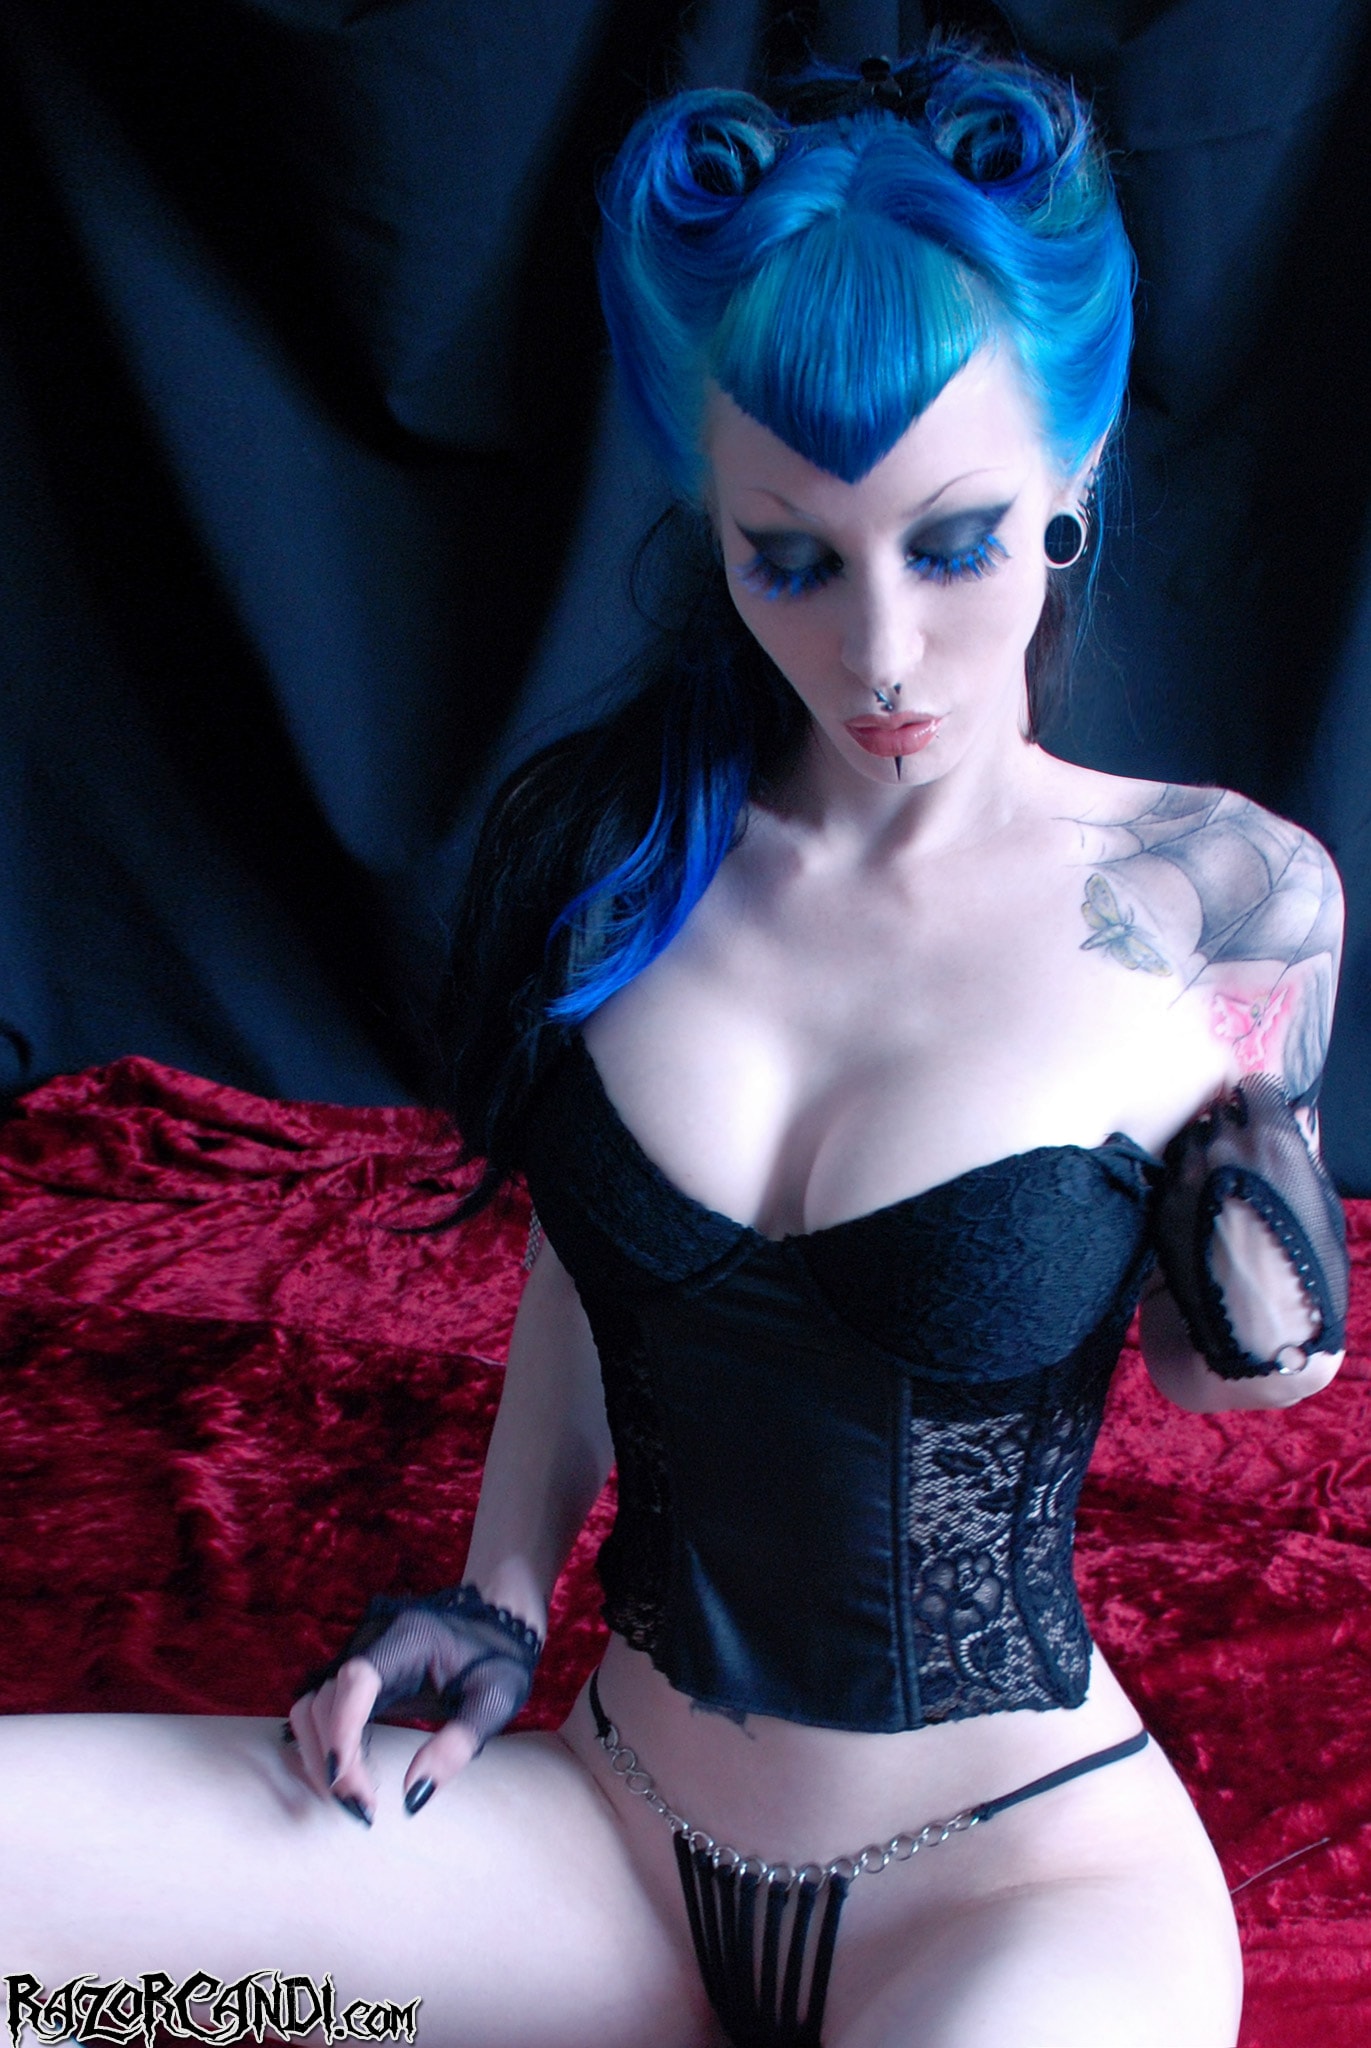 Razor Candi - Pale Skinned Blue Haired Punk Beauty Razor Candi | Picture (5)